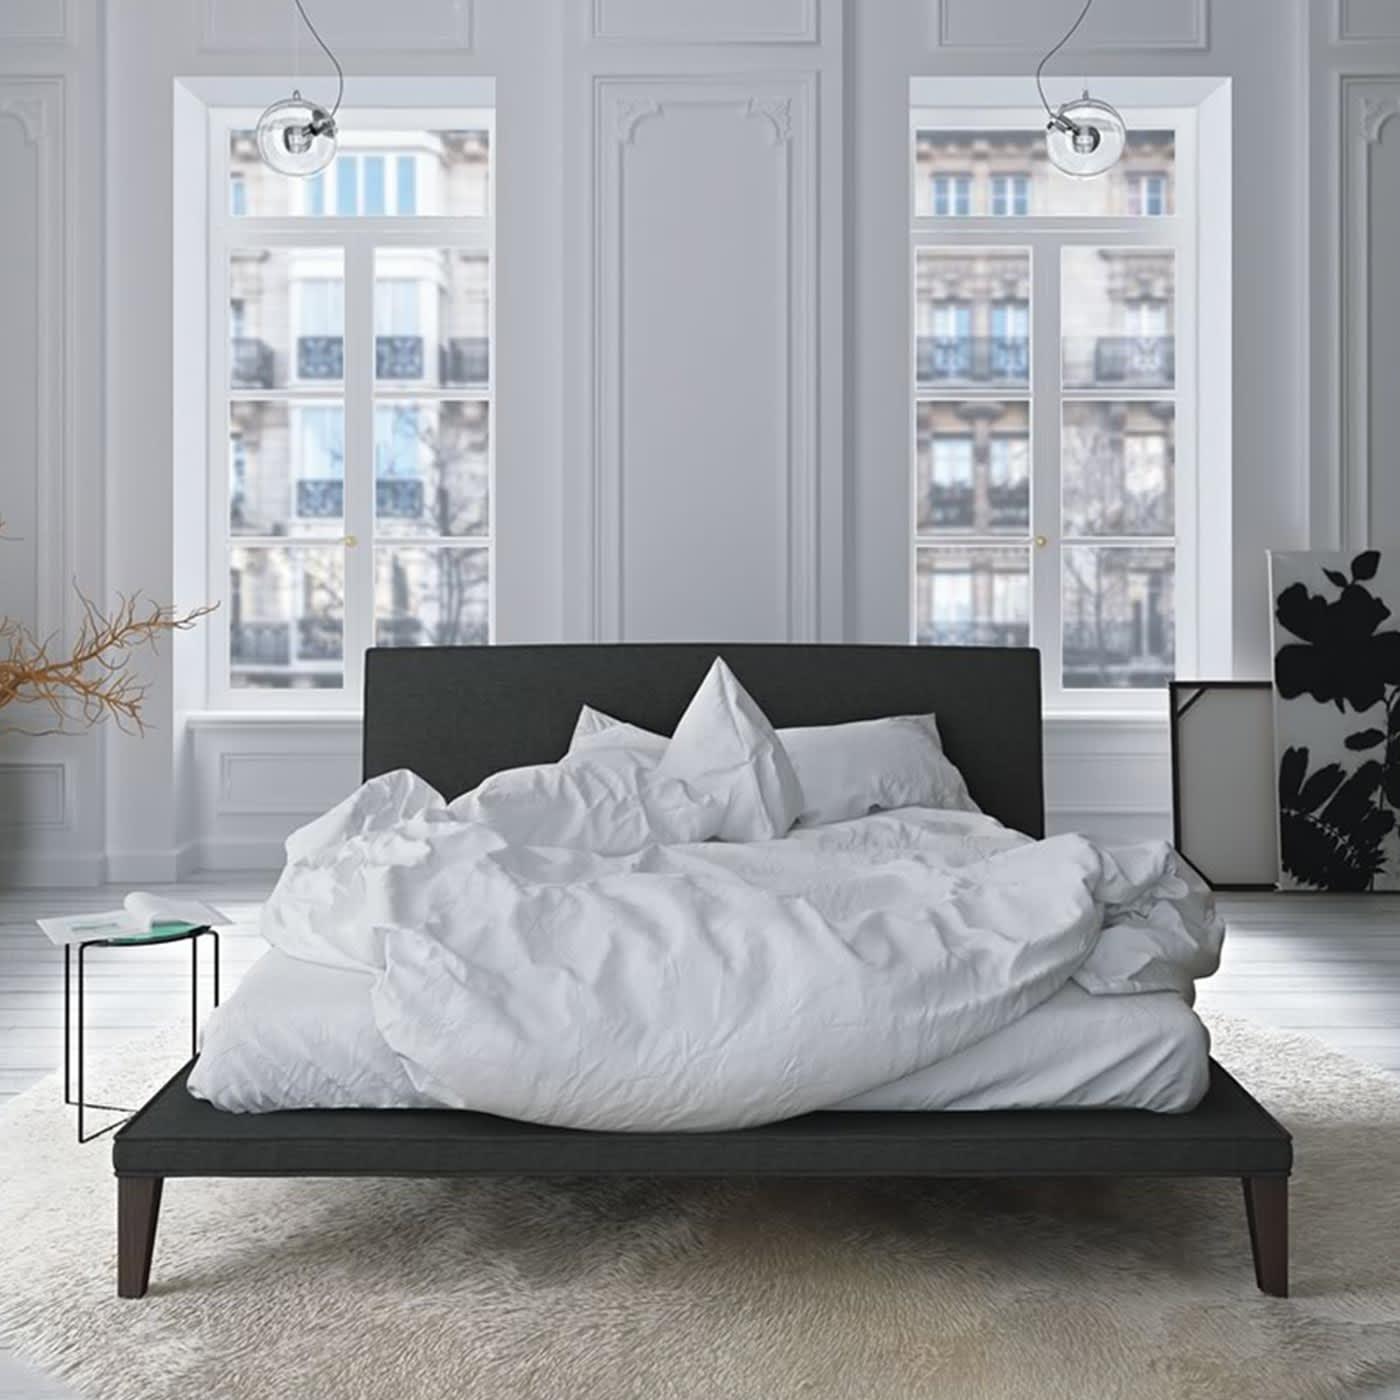 Gilda Italian Handcrafted Luxurious Bed